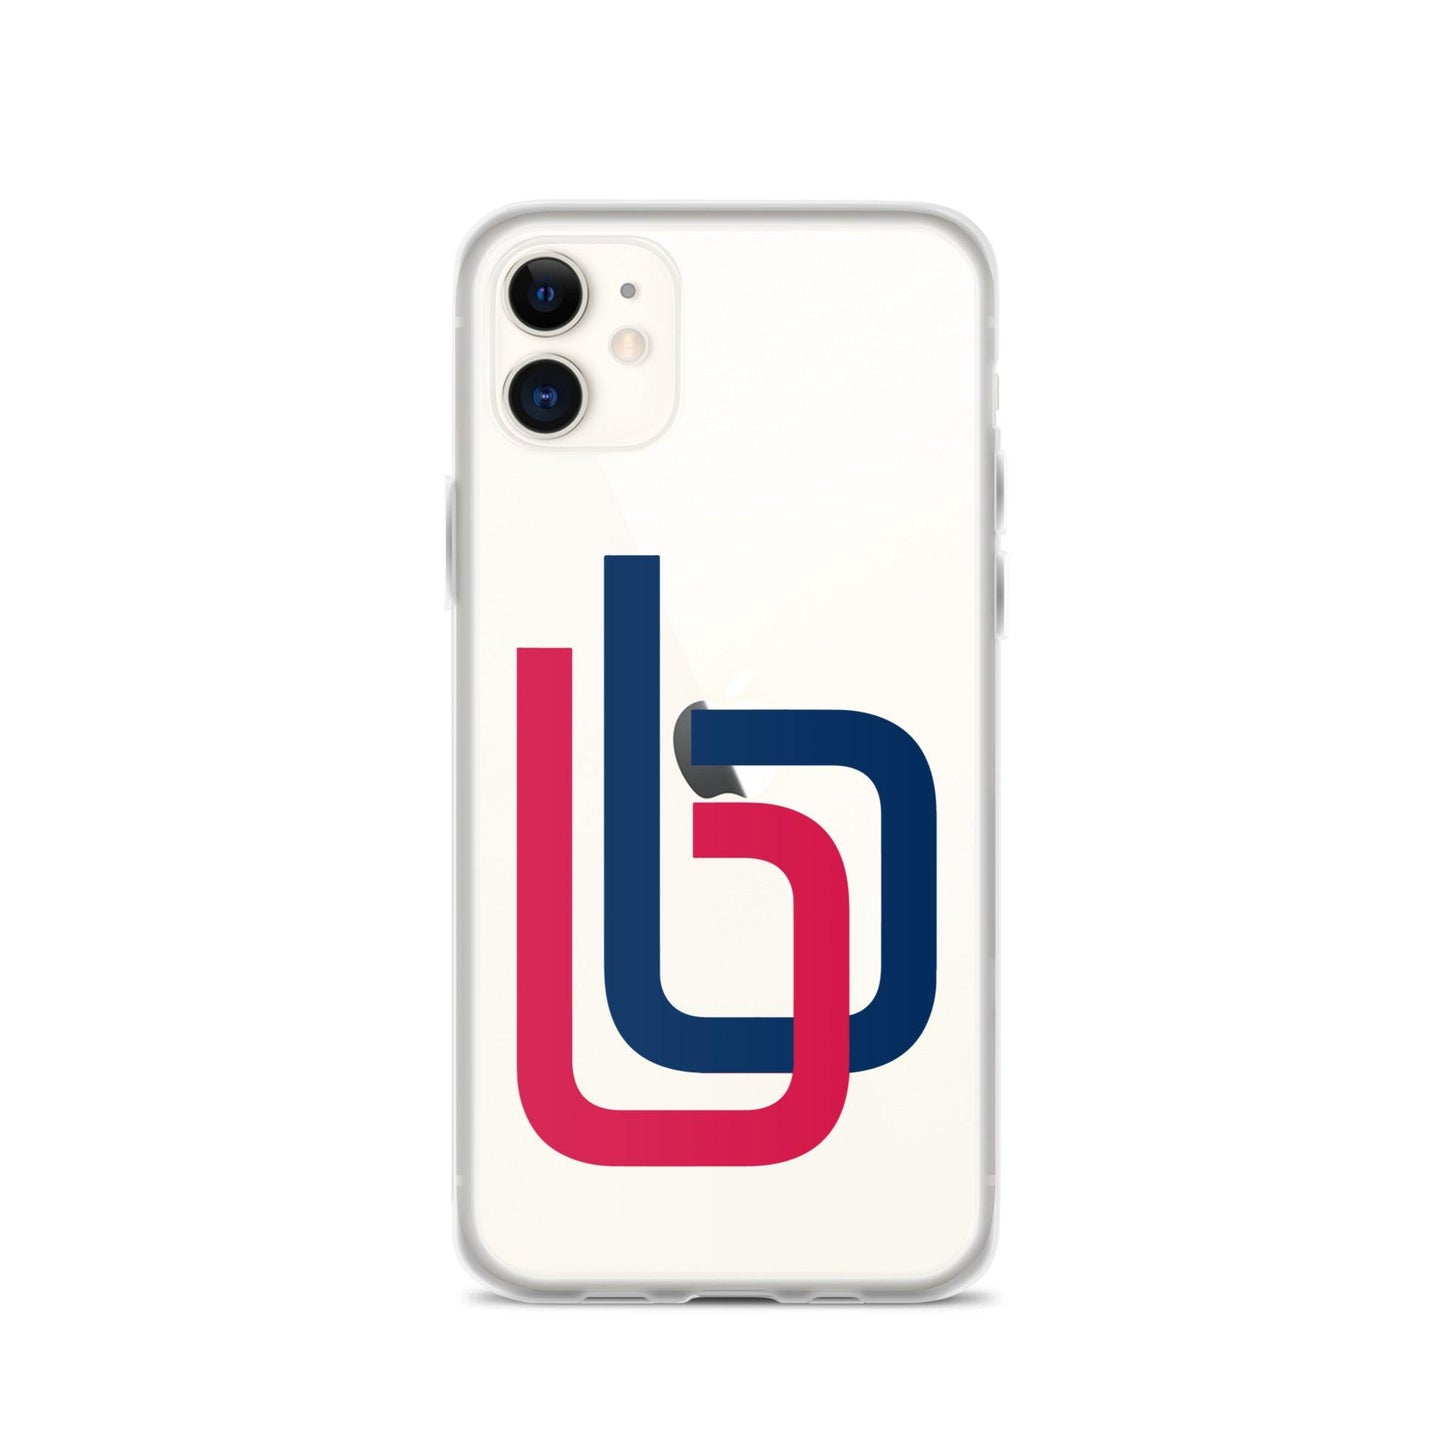 Byron Buxton “Signature” iPhone Case - Fan Arch